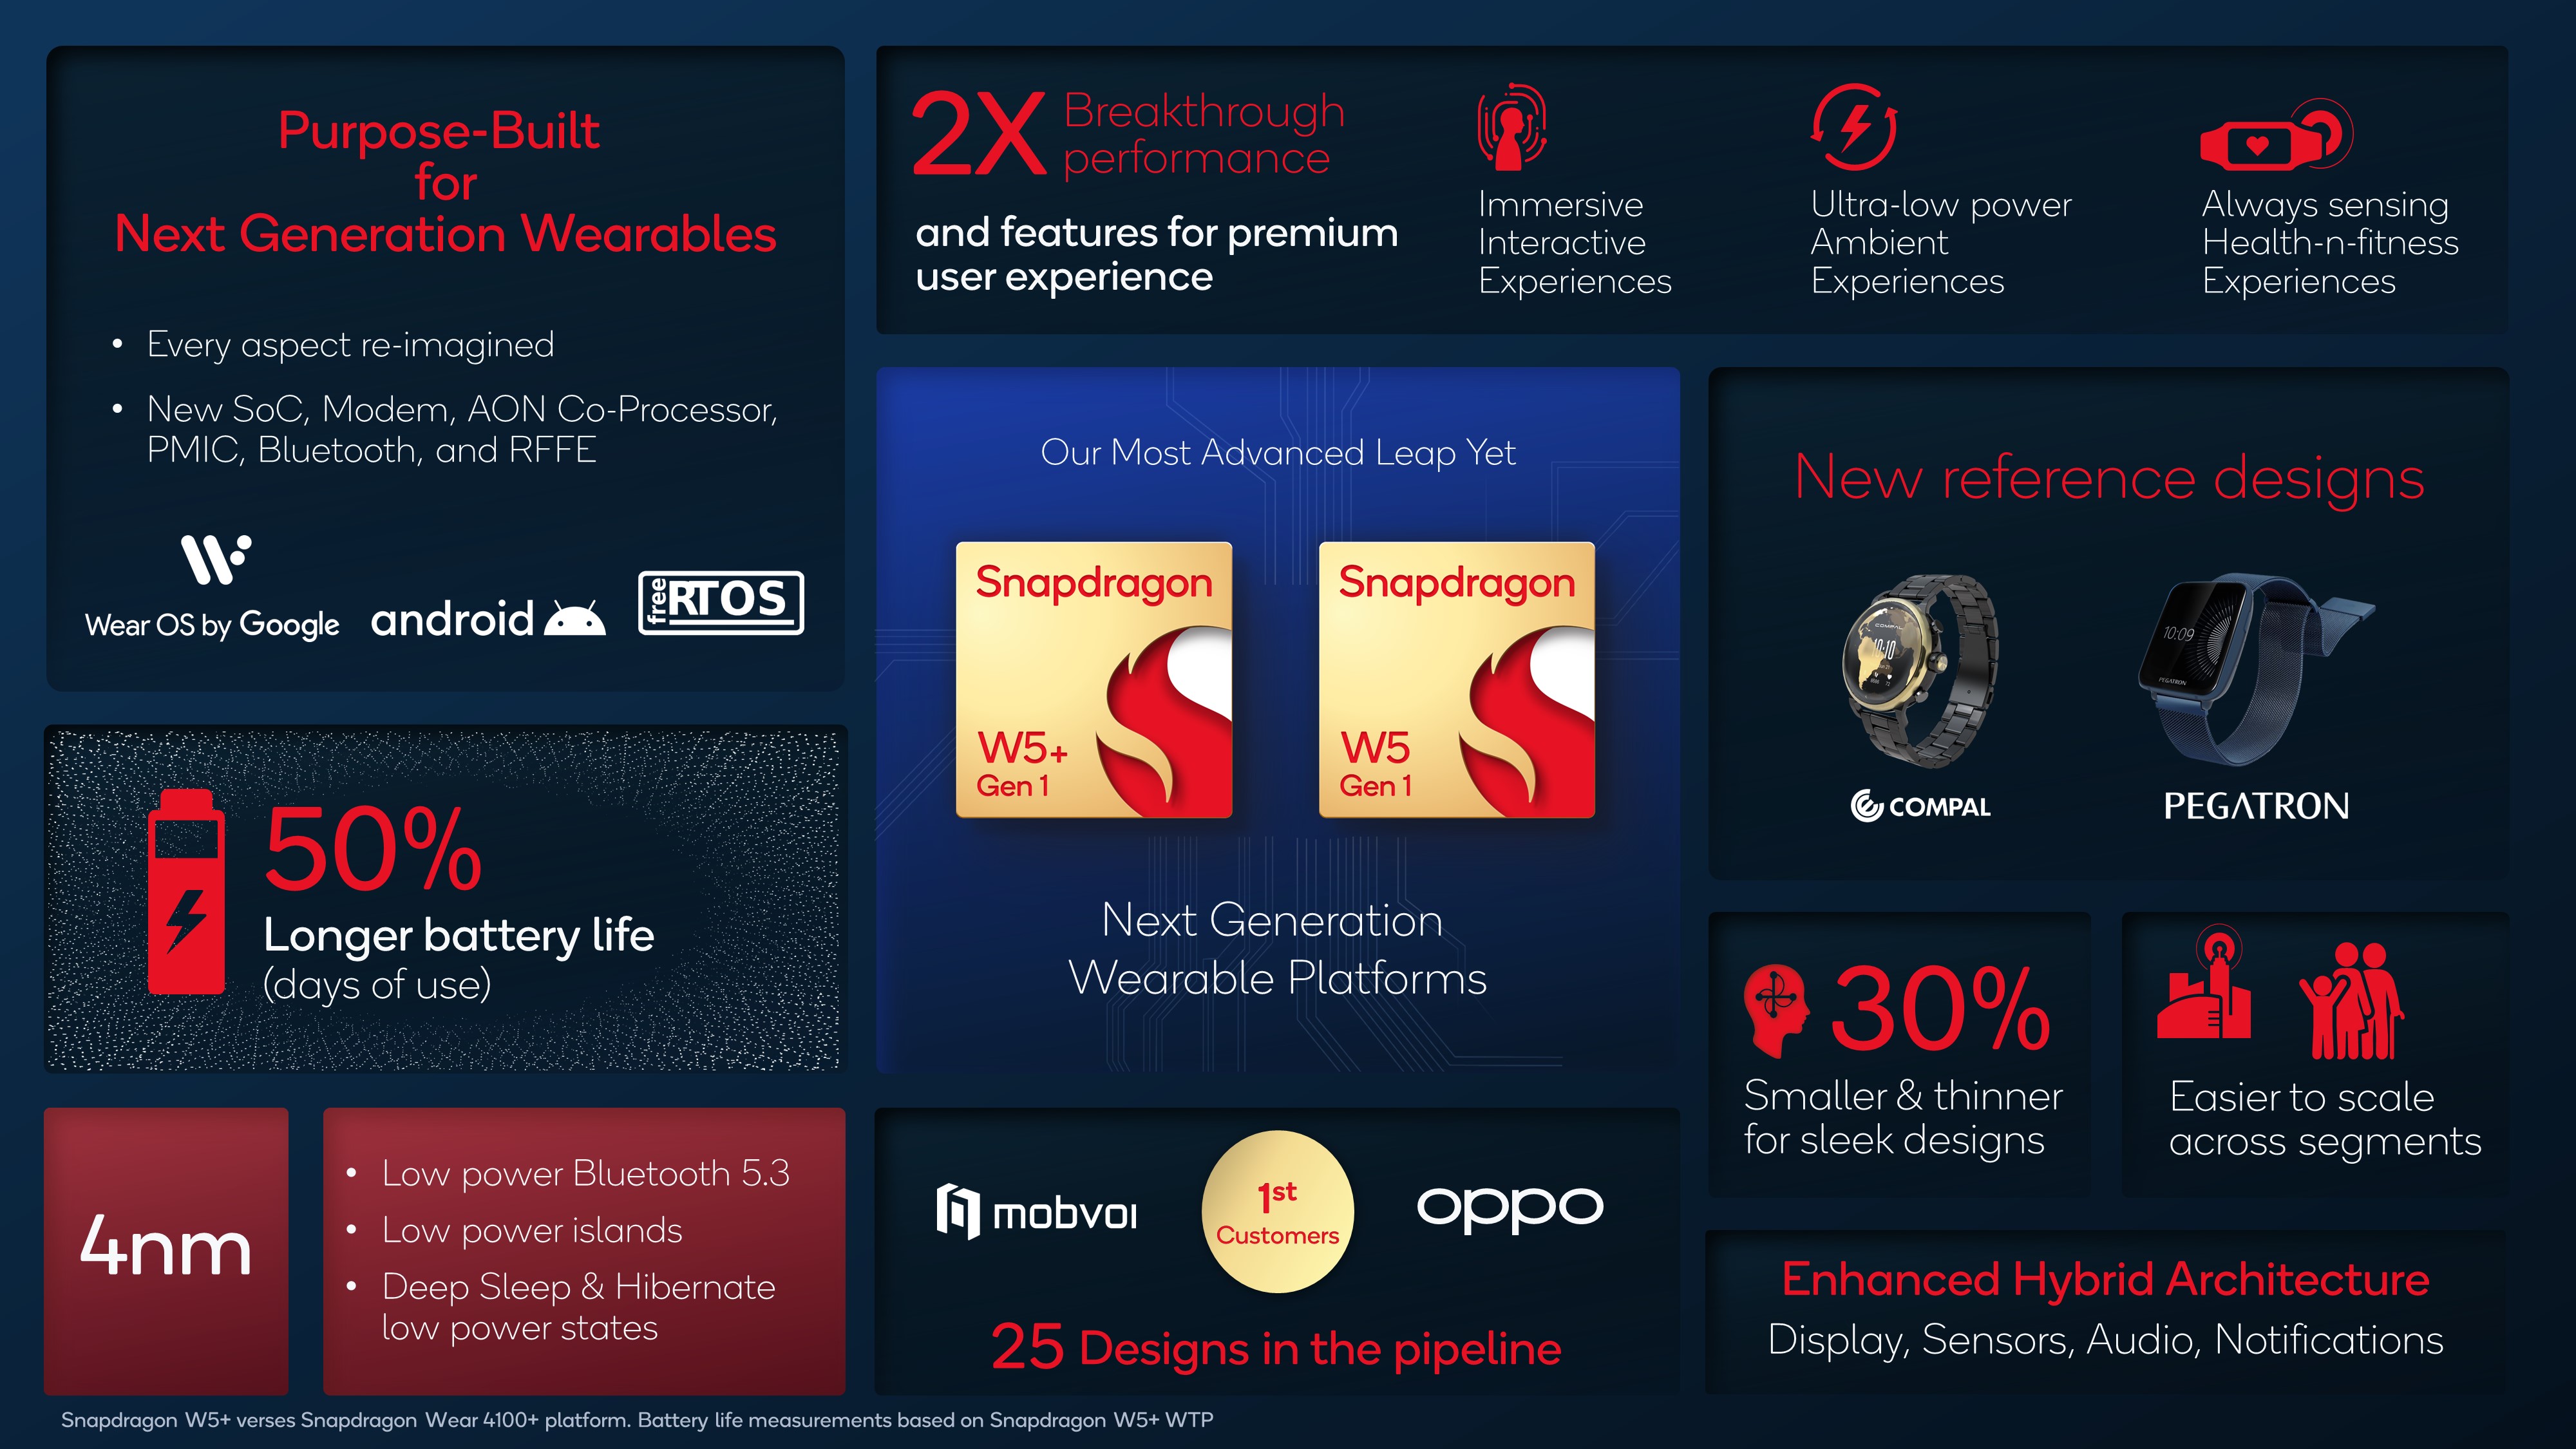 Qualcomm Snapdragon W5+ platform summary